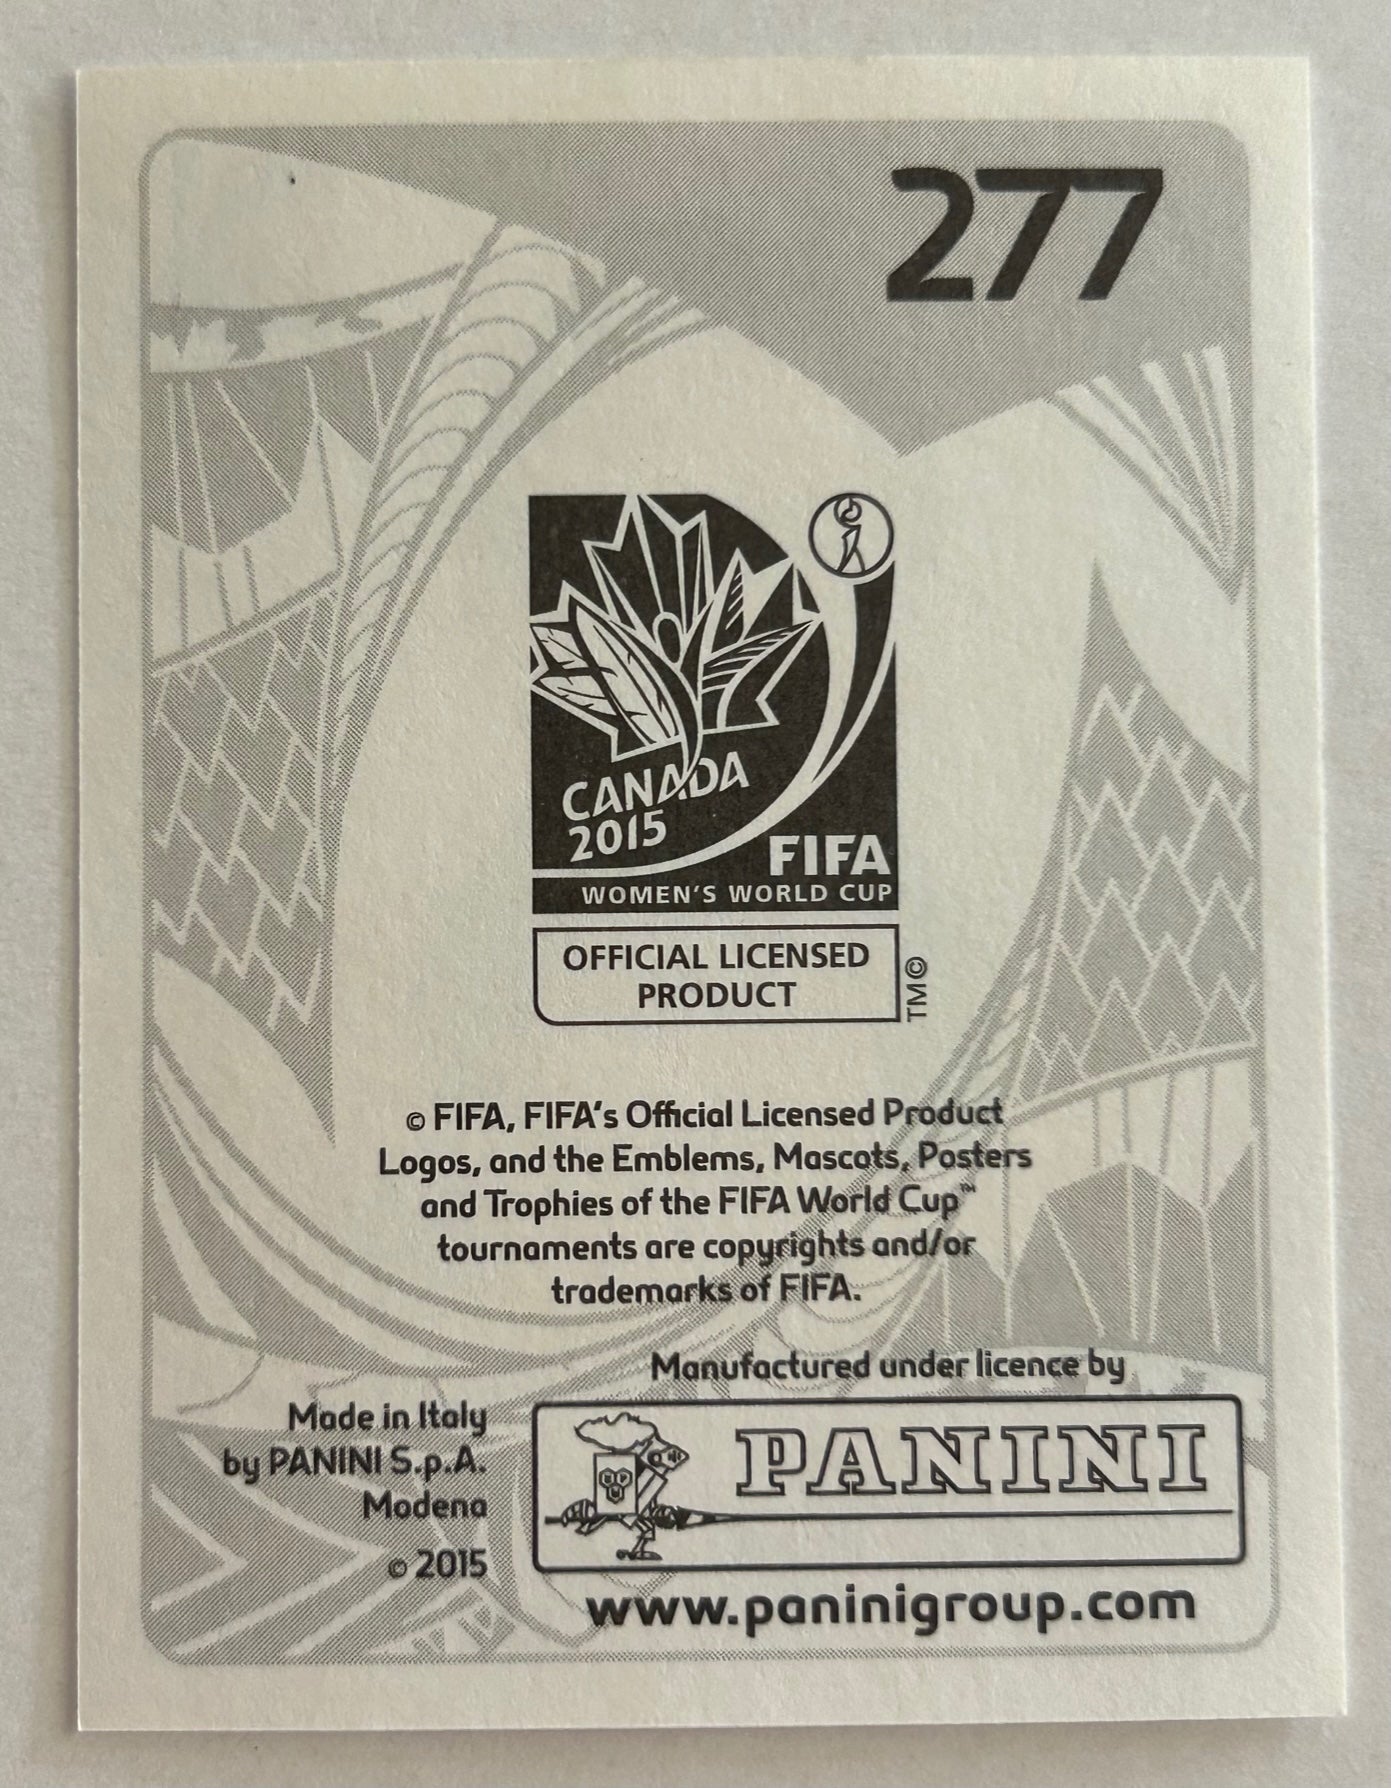 Panini FIFA Women's World Cup Canada 2015 - CAITLIN FOORD (AUSTRALIA) Sticker #277